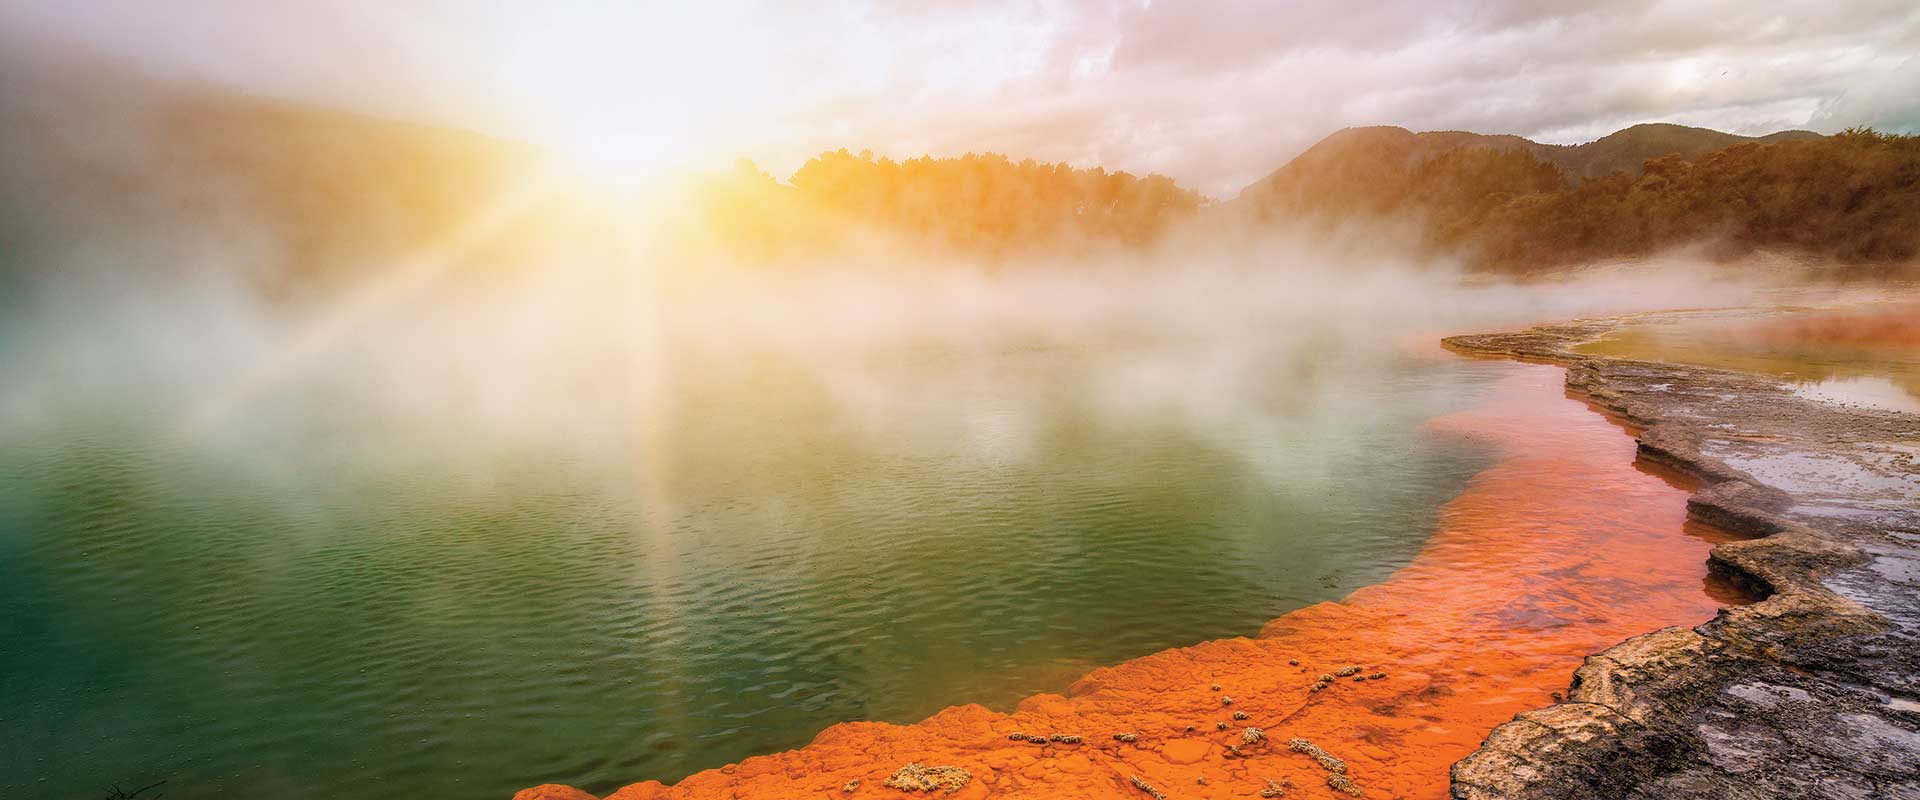 Steaming natural pool at sunset, New Zealand